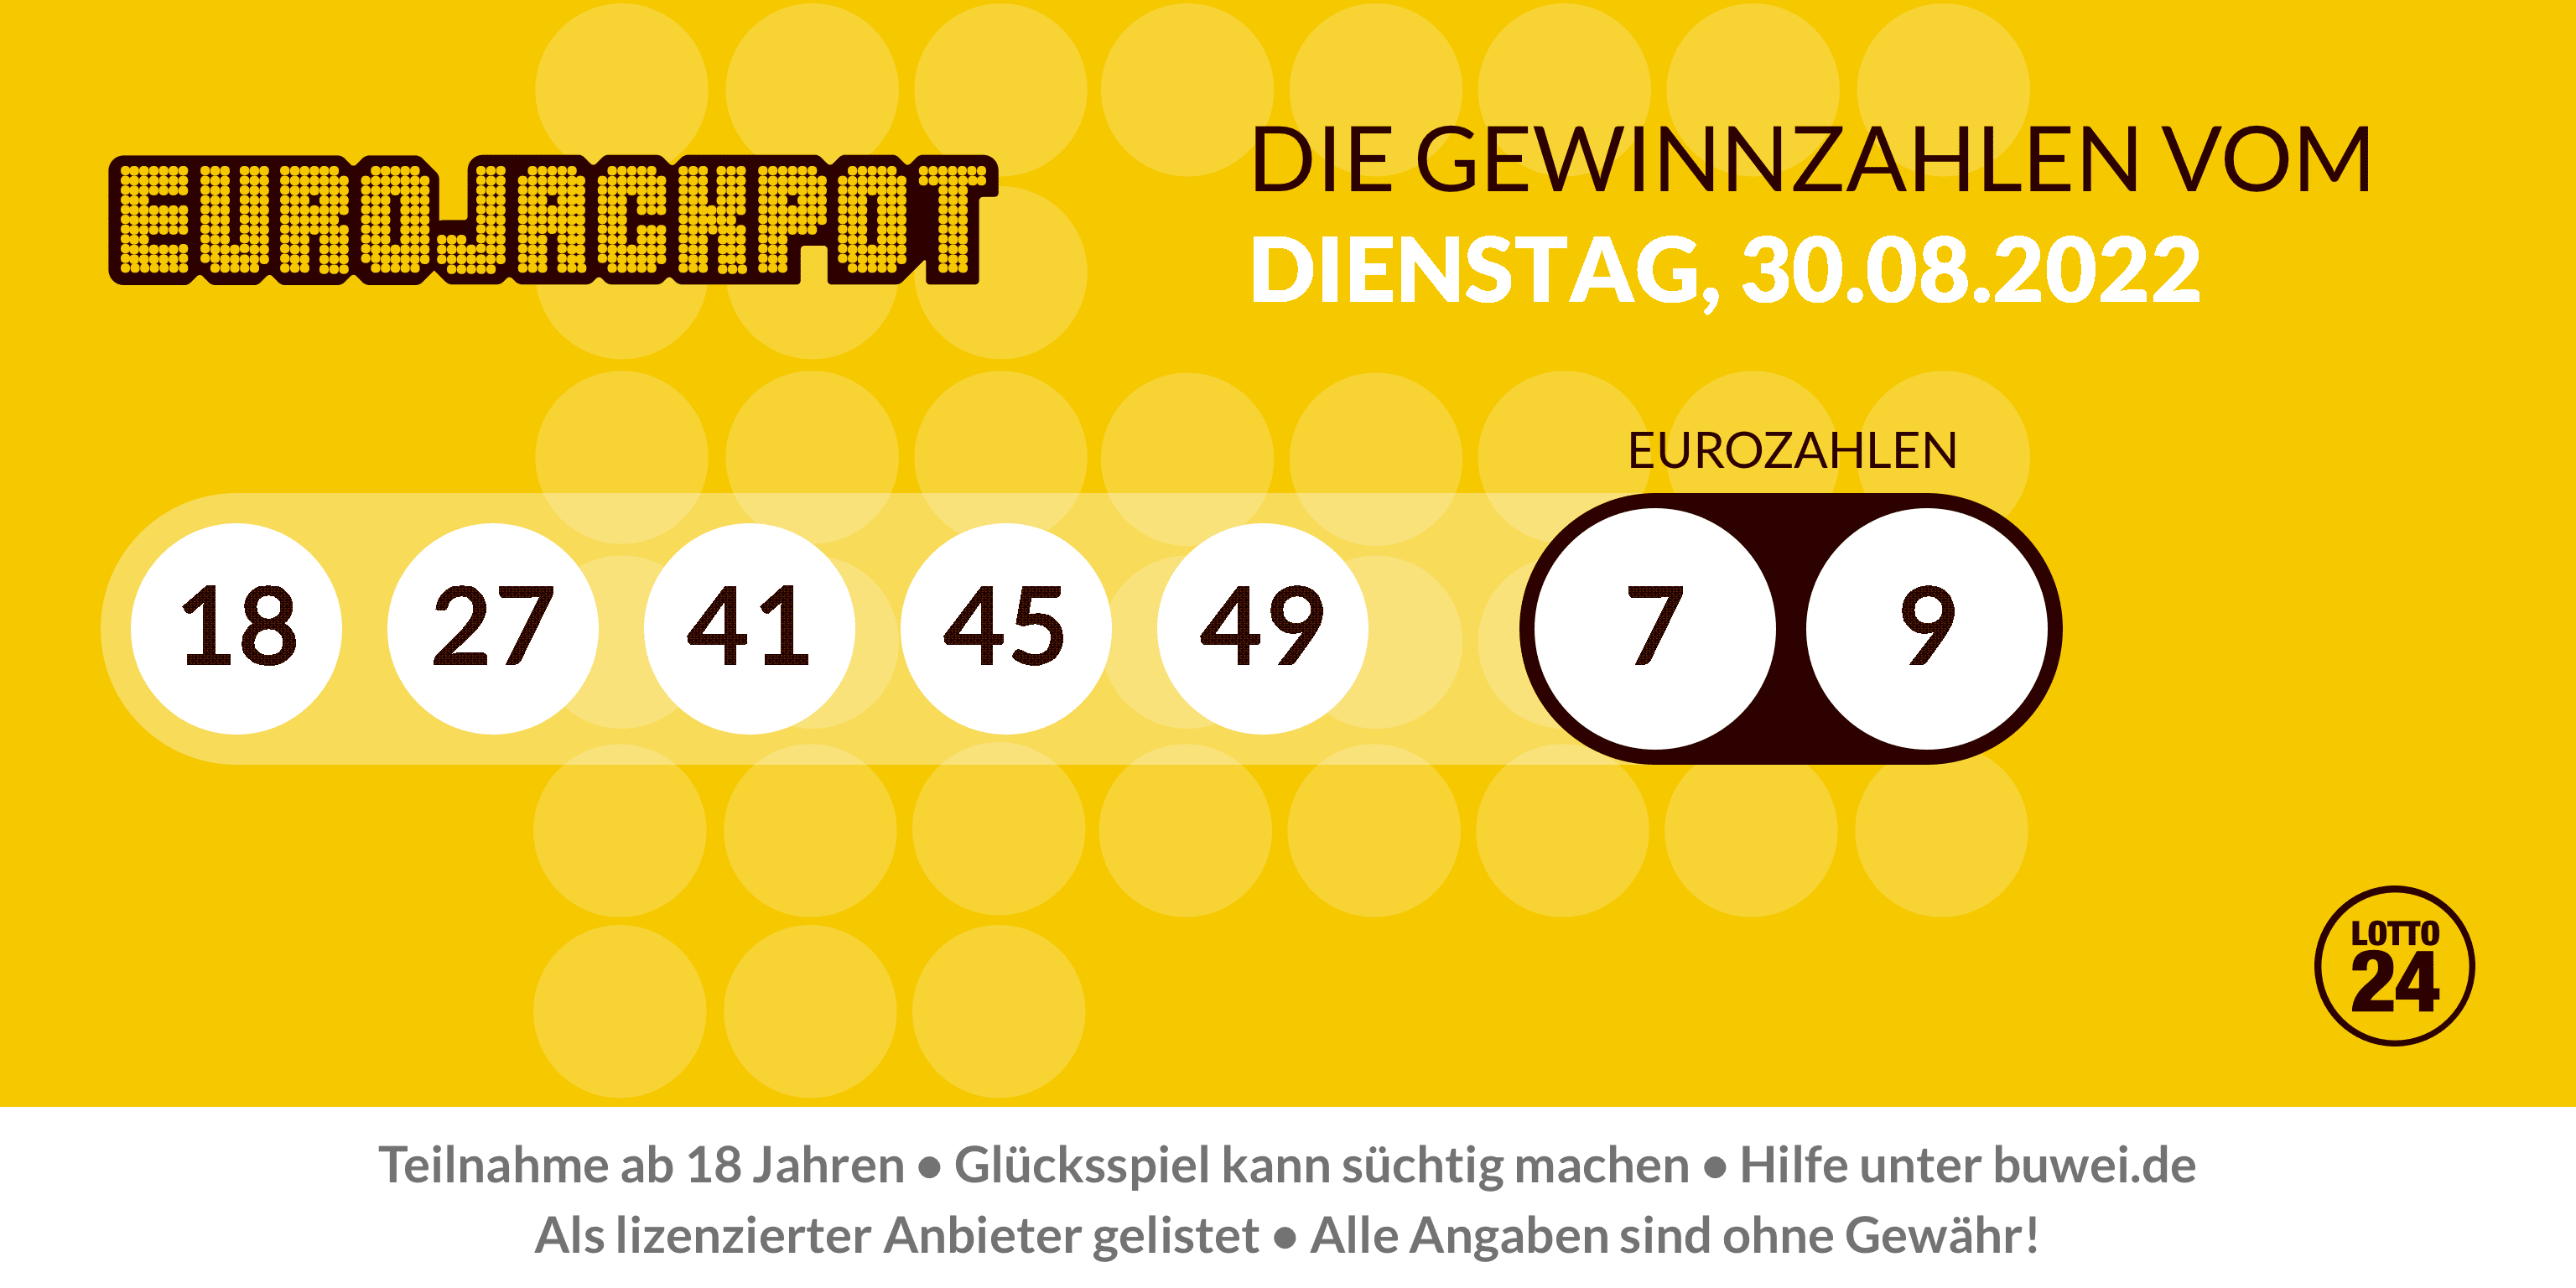 LOTTO24.de on Twitter: "Die #Gewinnzahlen bei #Eurojackpot, vom 30.08.2022  lauten: 18, 27, 41, 45, 49 Eurozahlen: 7, 9 Alle Gewinnzahlen unter:  https://t.co/YY22VxaUJO https://t.co/5o9CC98cfc" / Twitter